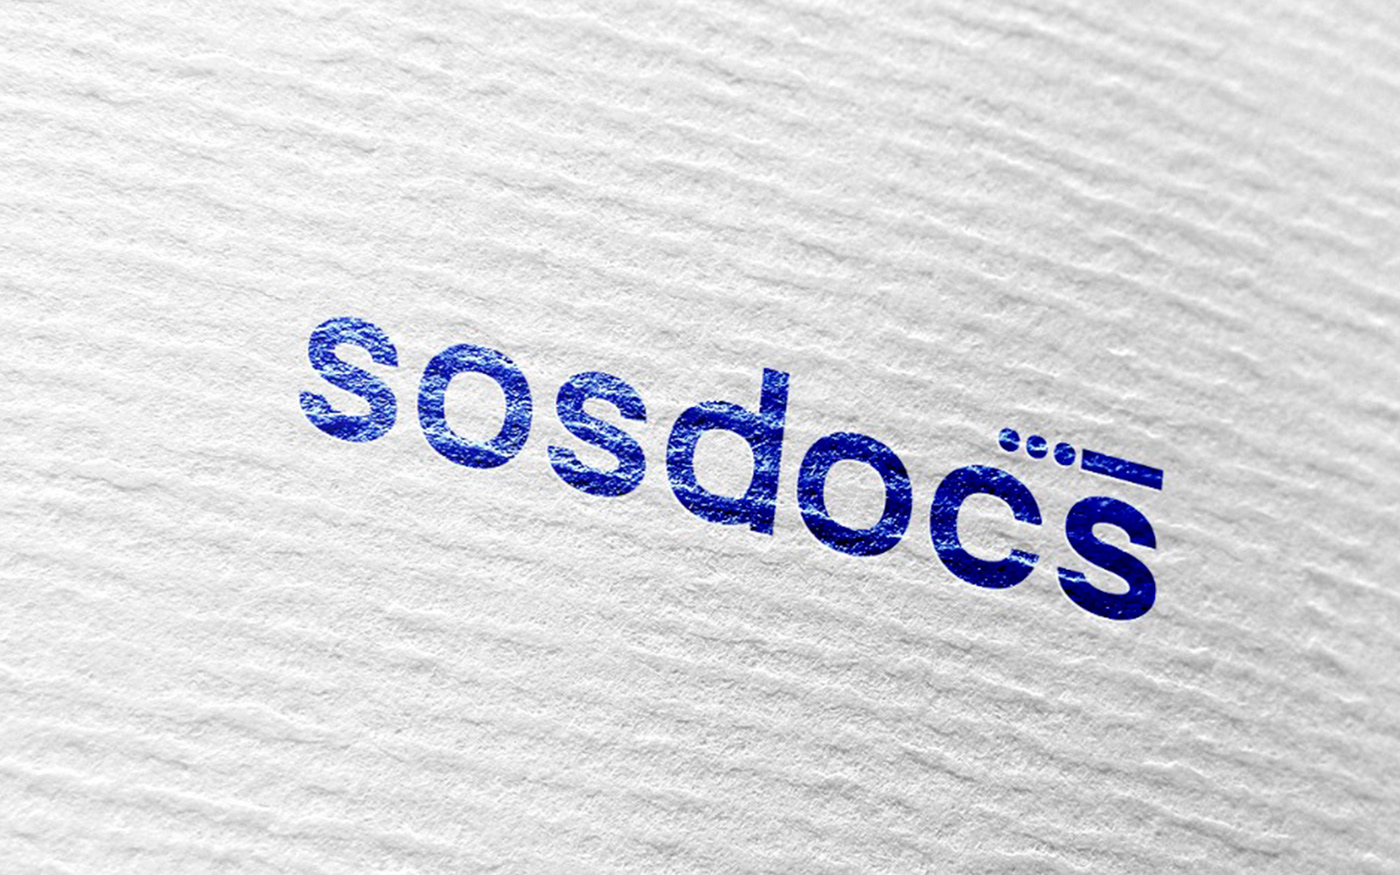 brand identidade visual logo marca rebranding visual identity SOSDOCS